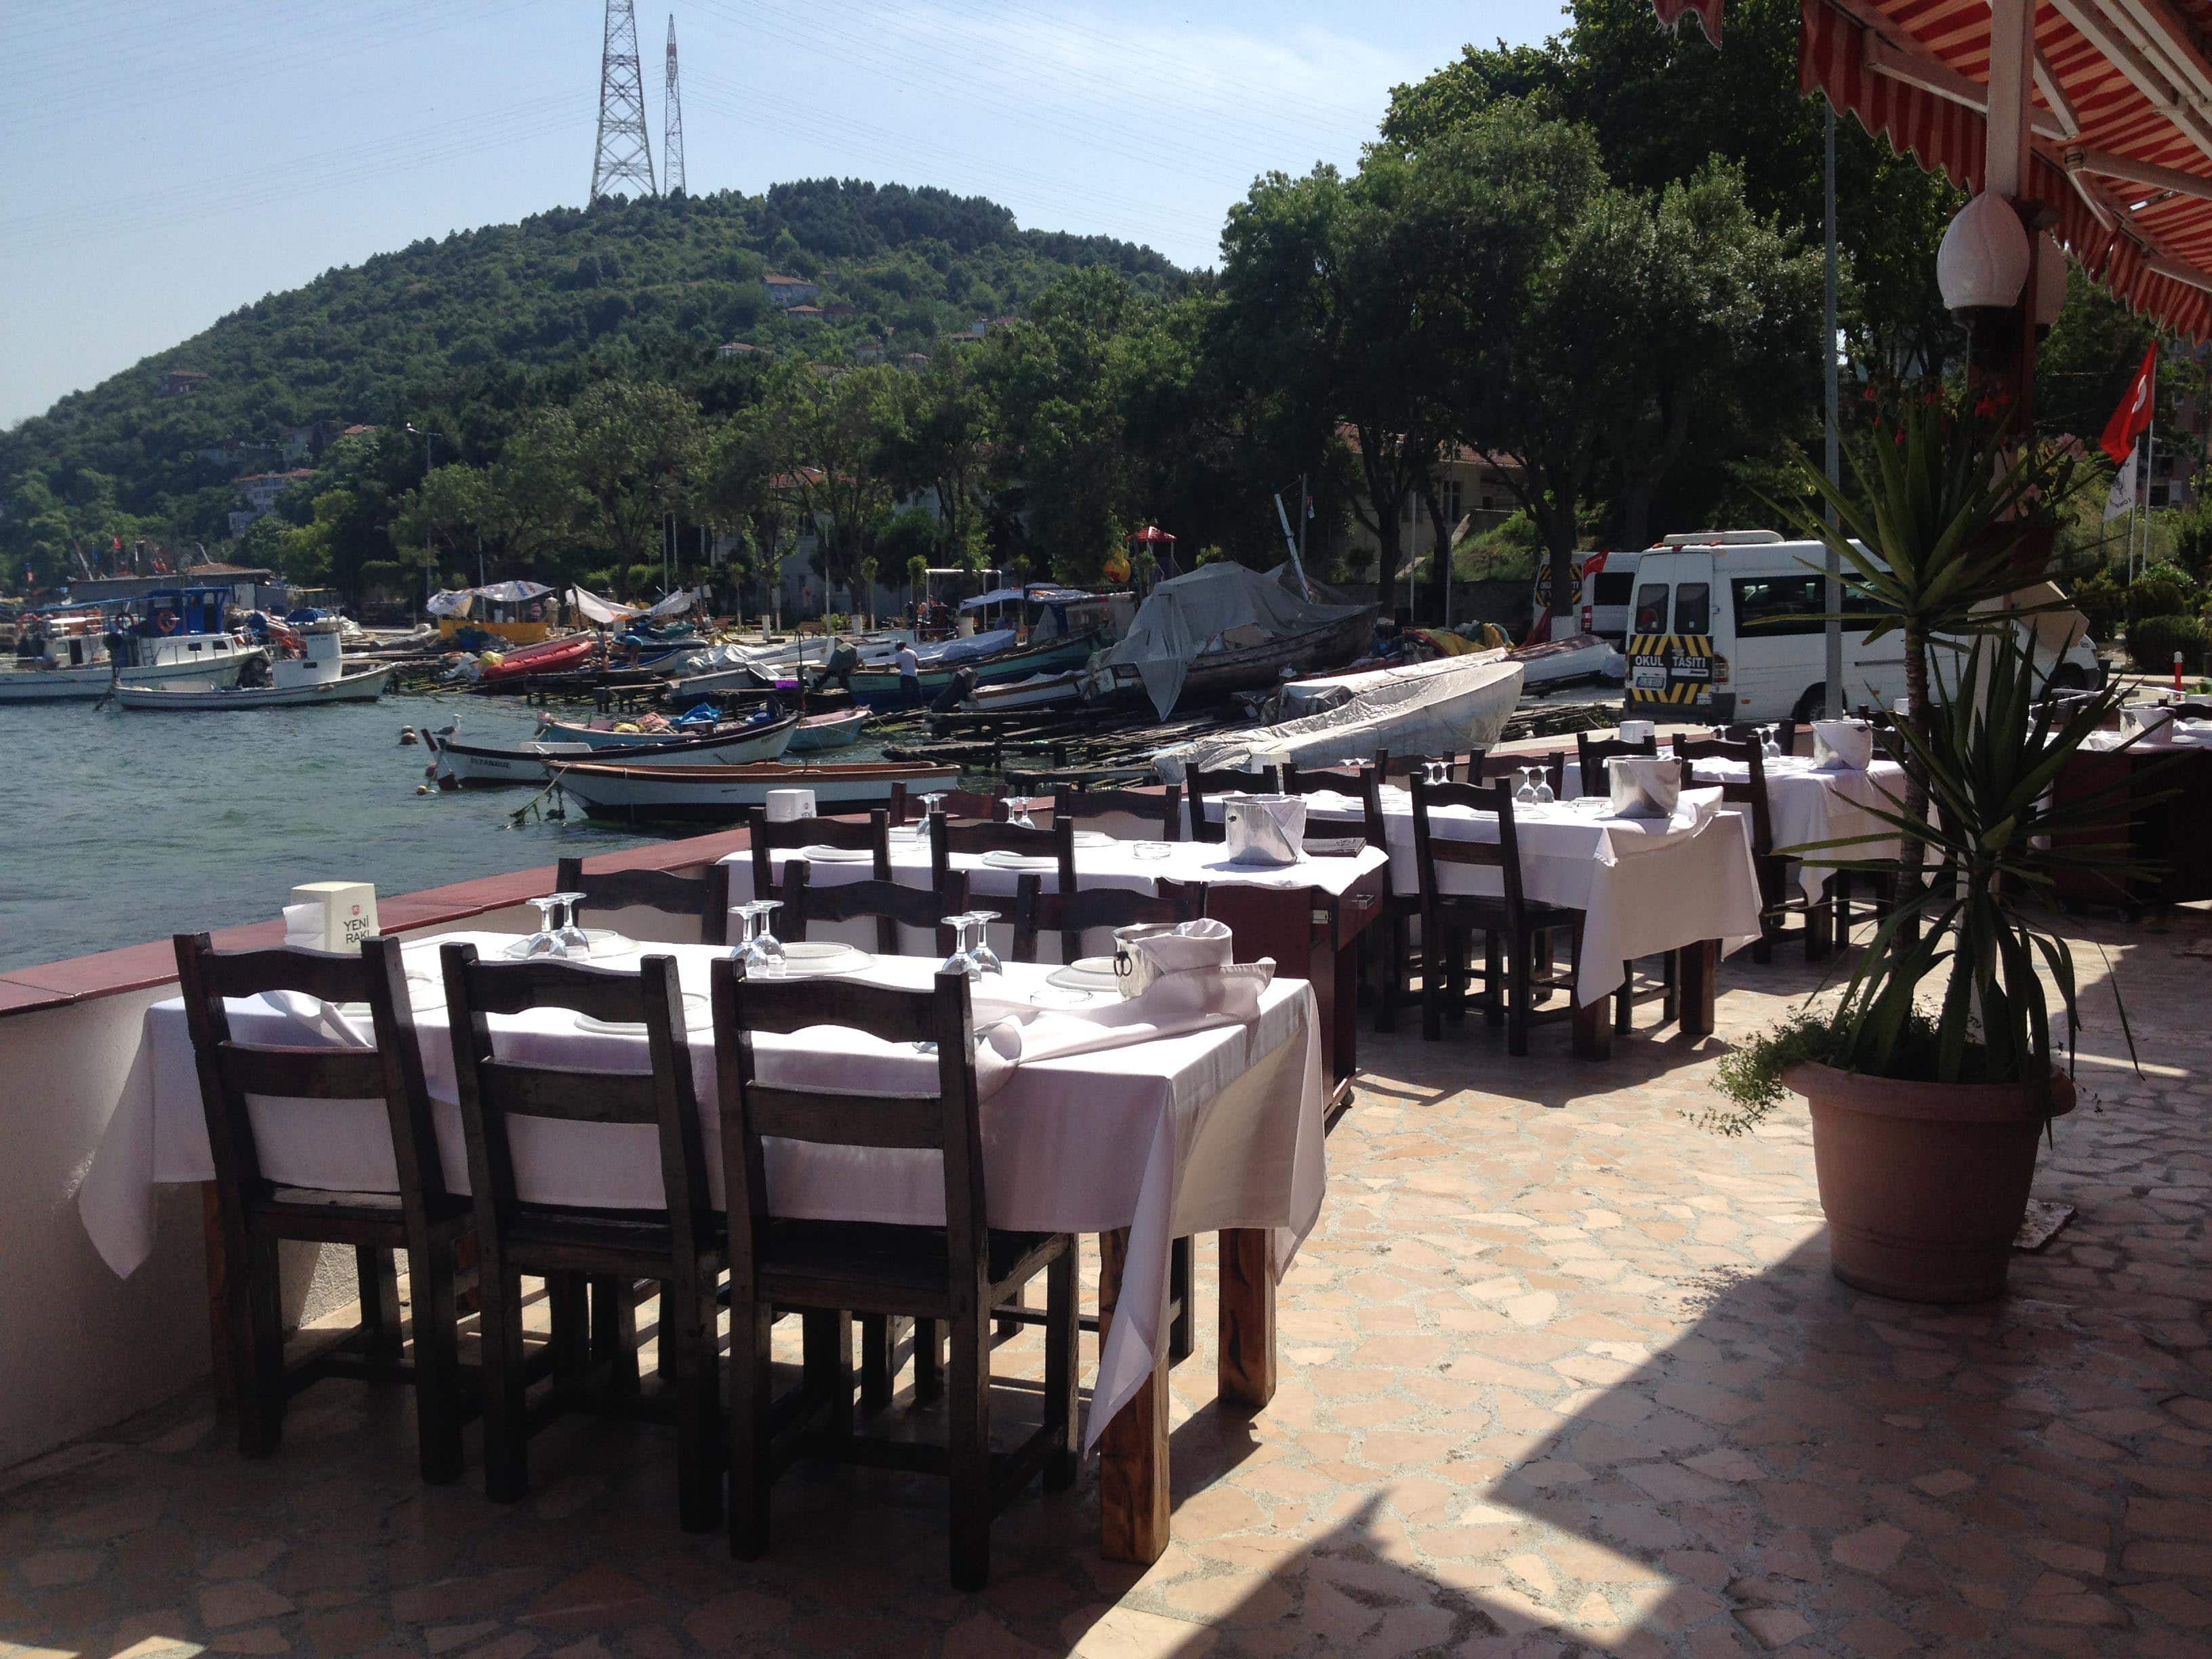 ayder restaurant photos pictures of ayder restaurant rumeli kavagi istanbul